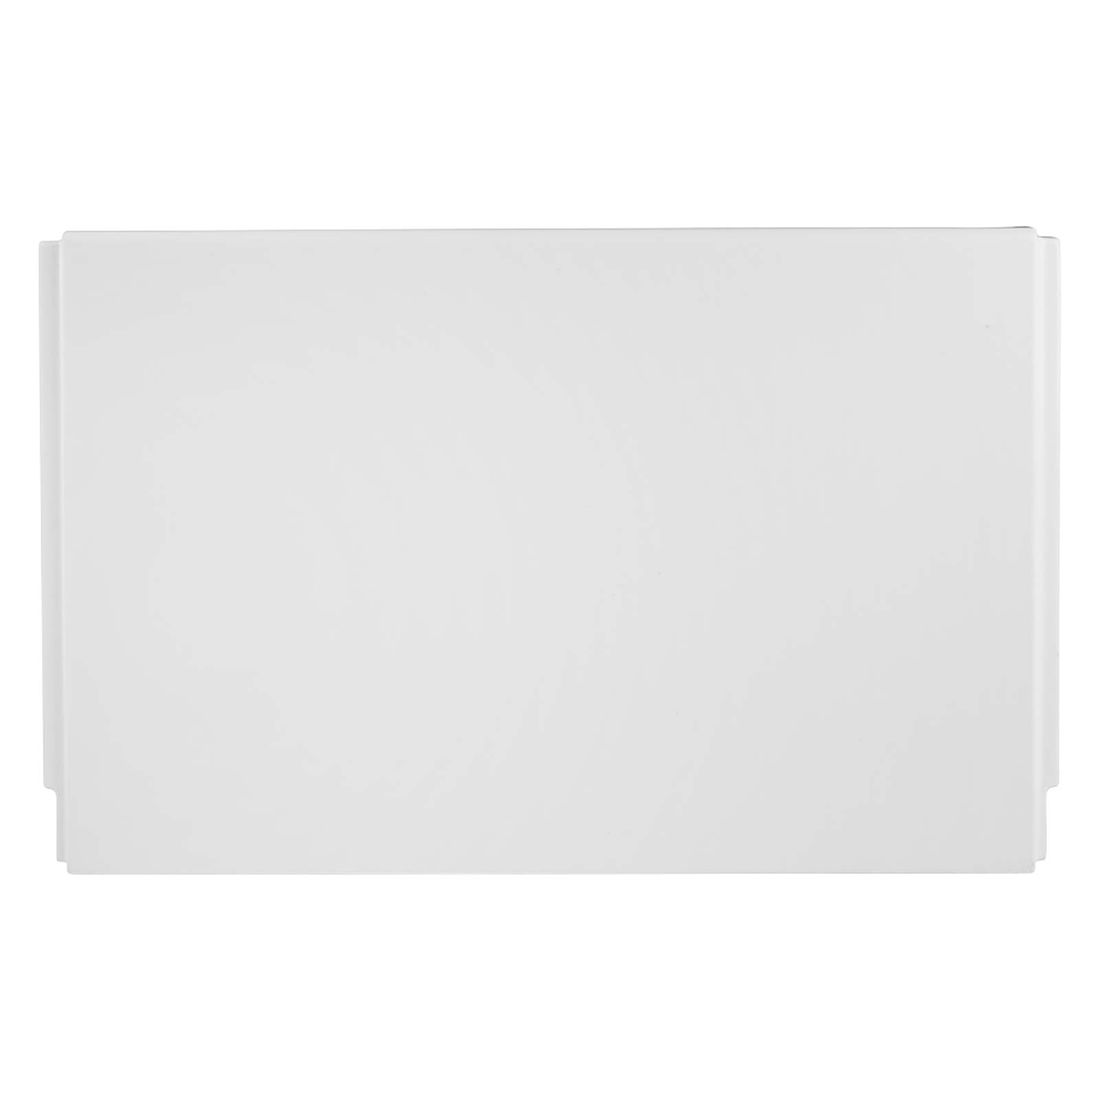 K-Vit Acrylic End Bath Panel White 800 X 550Mm